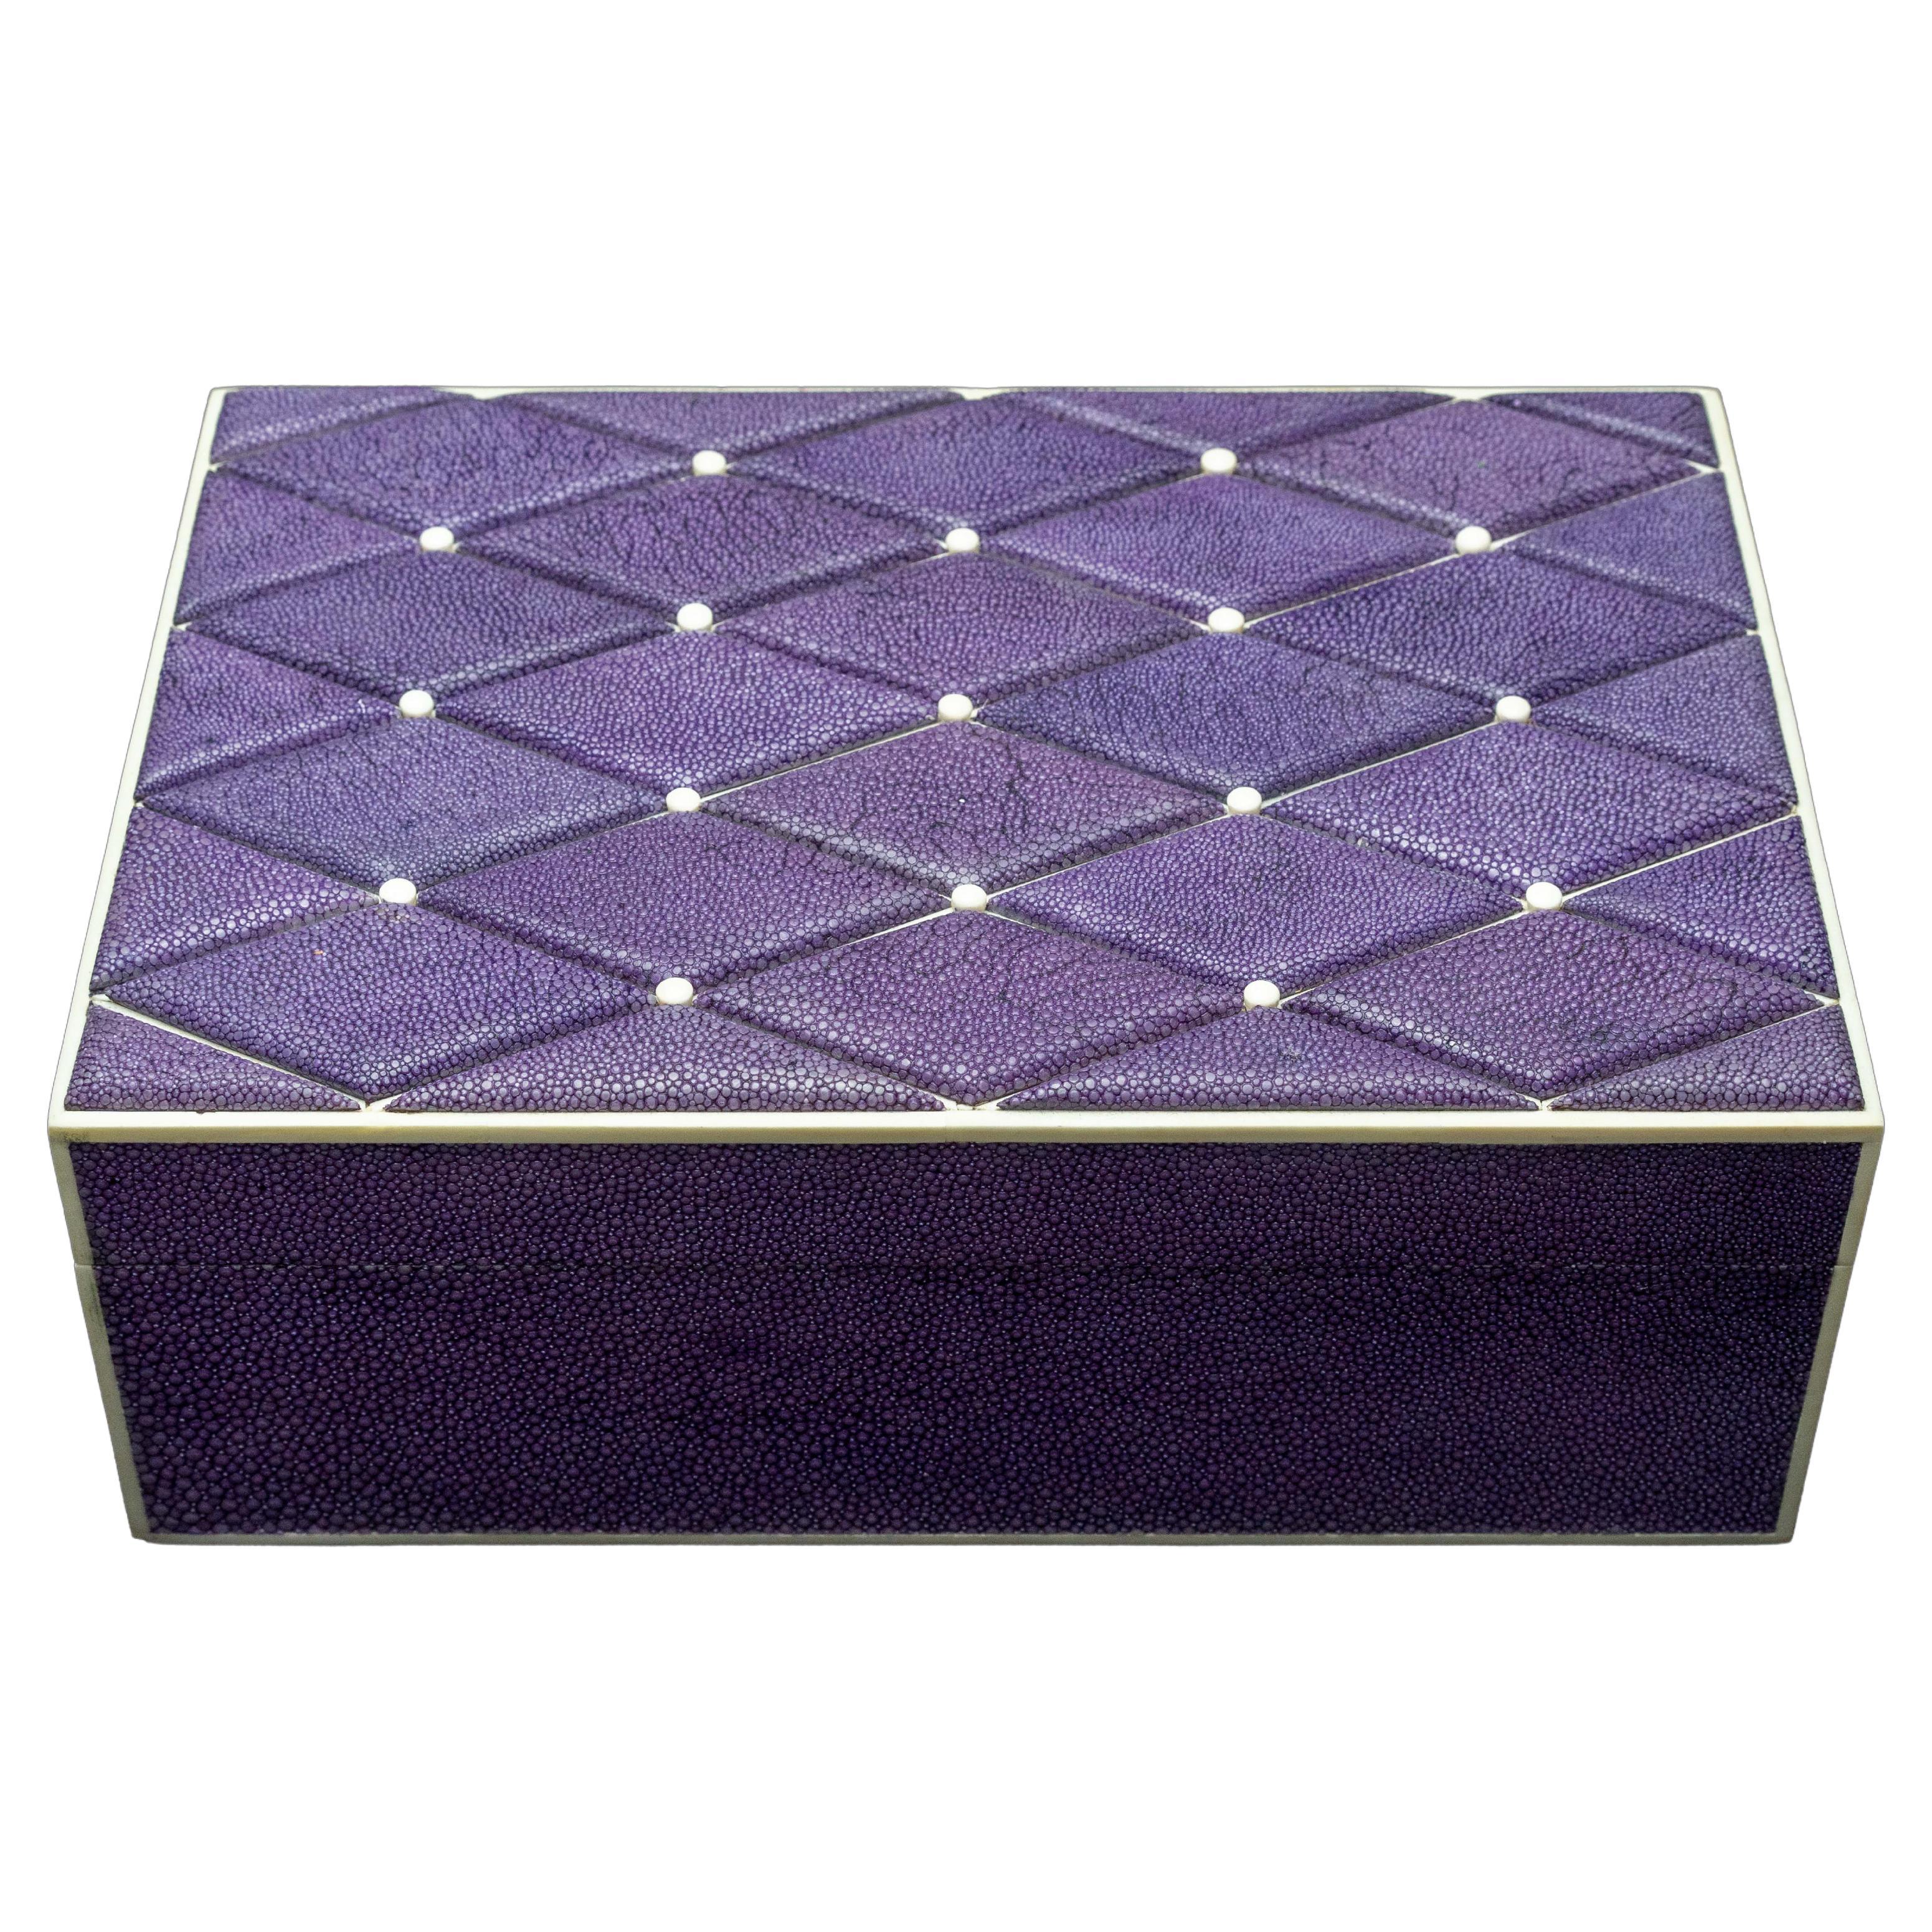 Grande boîte en galuchat violet avec garniture en os et diamants